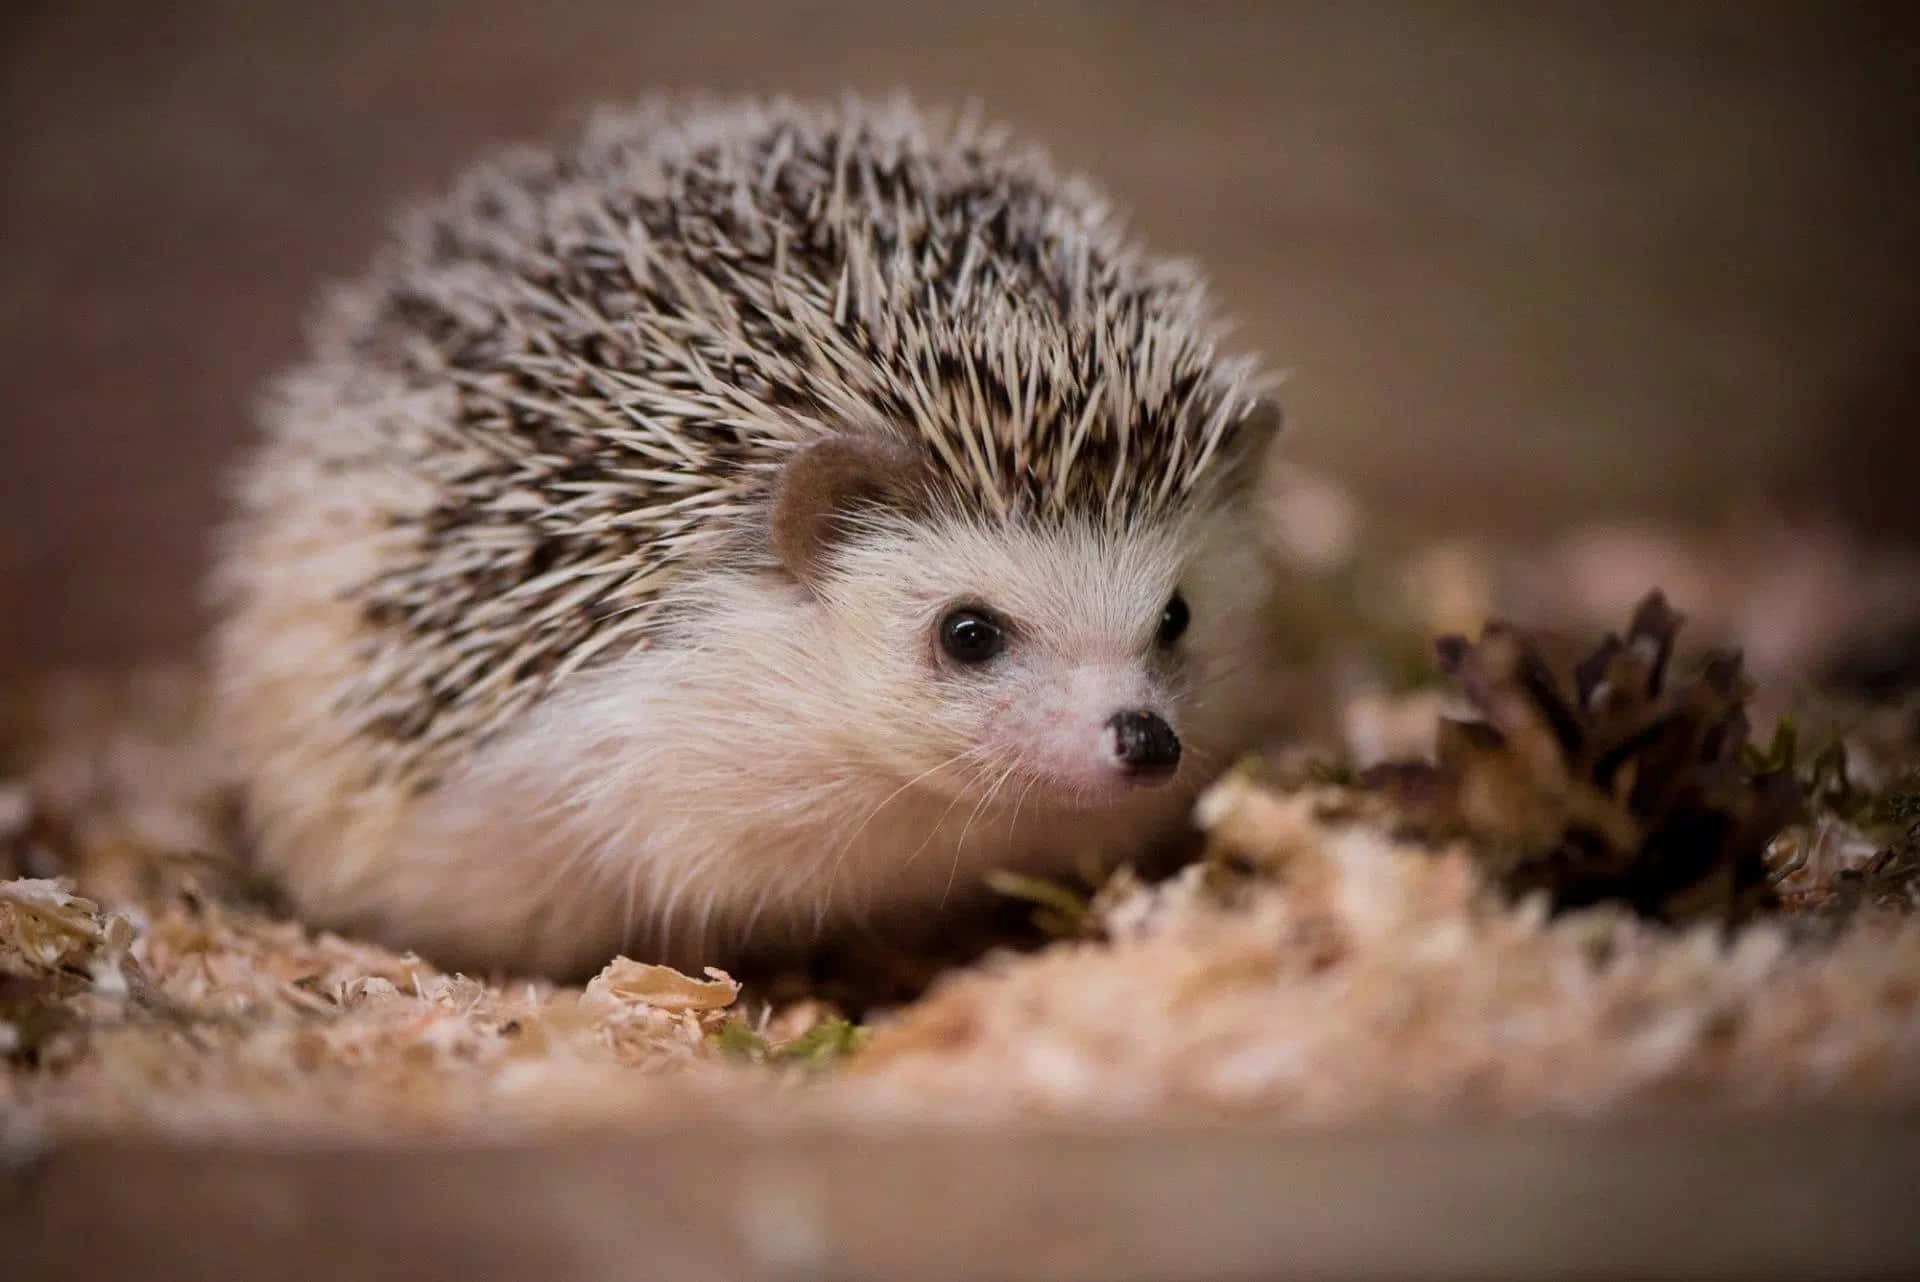 "The most adorable hedgehog!" Wallpaper